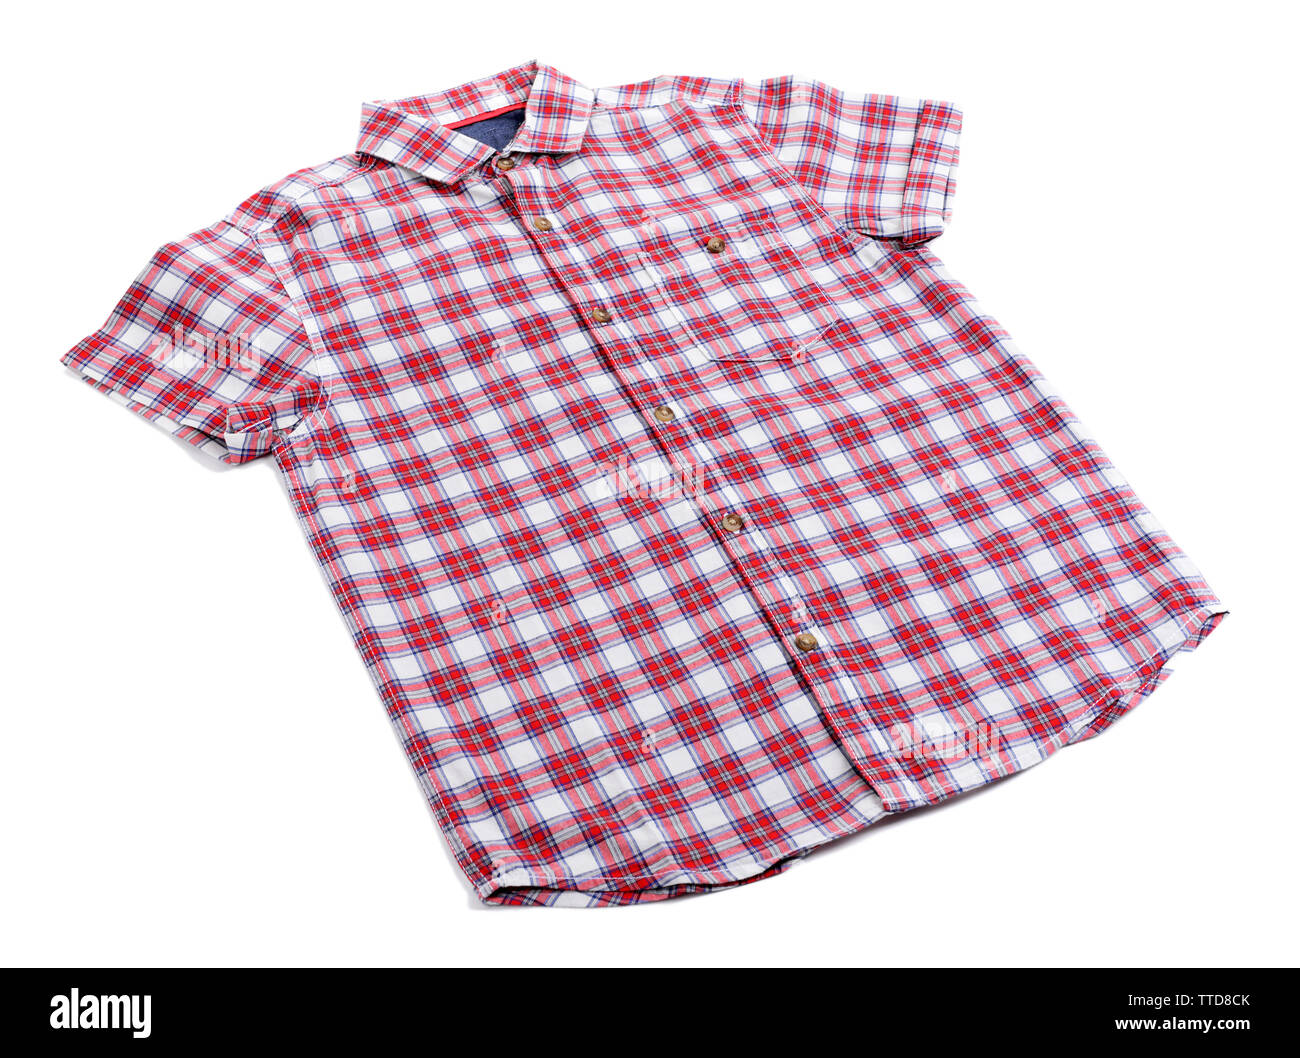 Red plaid shirt isolated on white background Stock Photo - Alamy